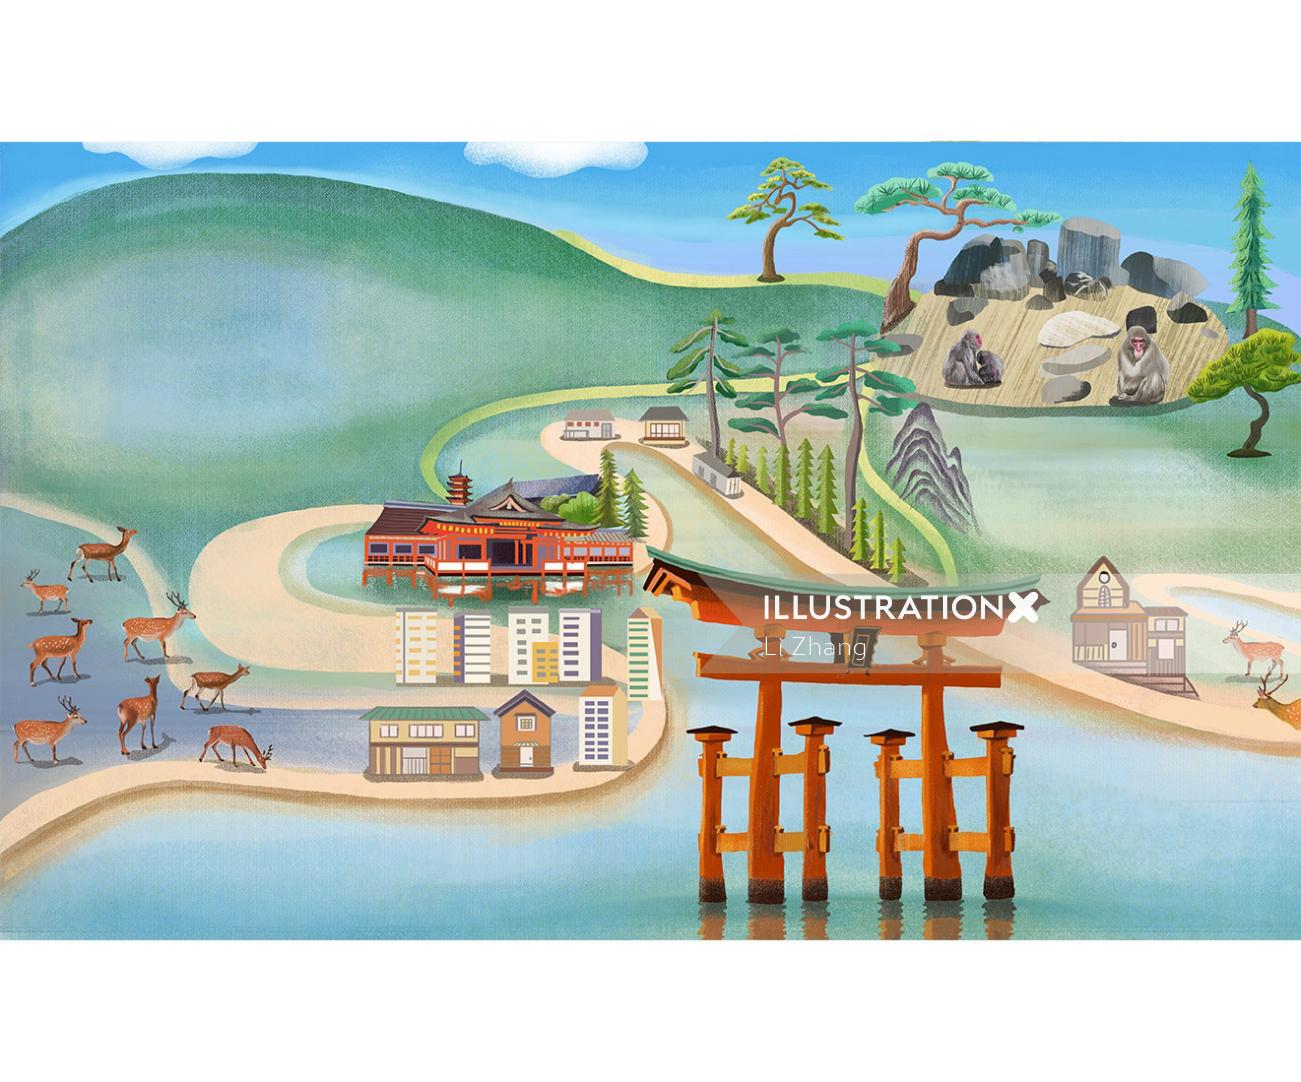 Illustration of Miyajima, an island in Japan, on a map